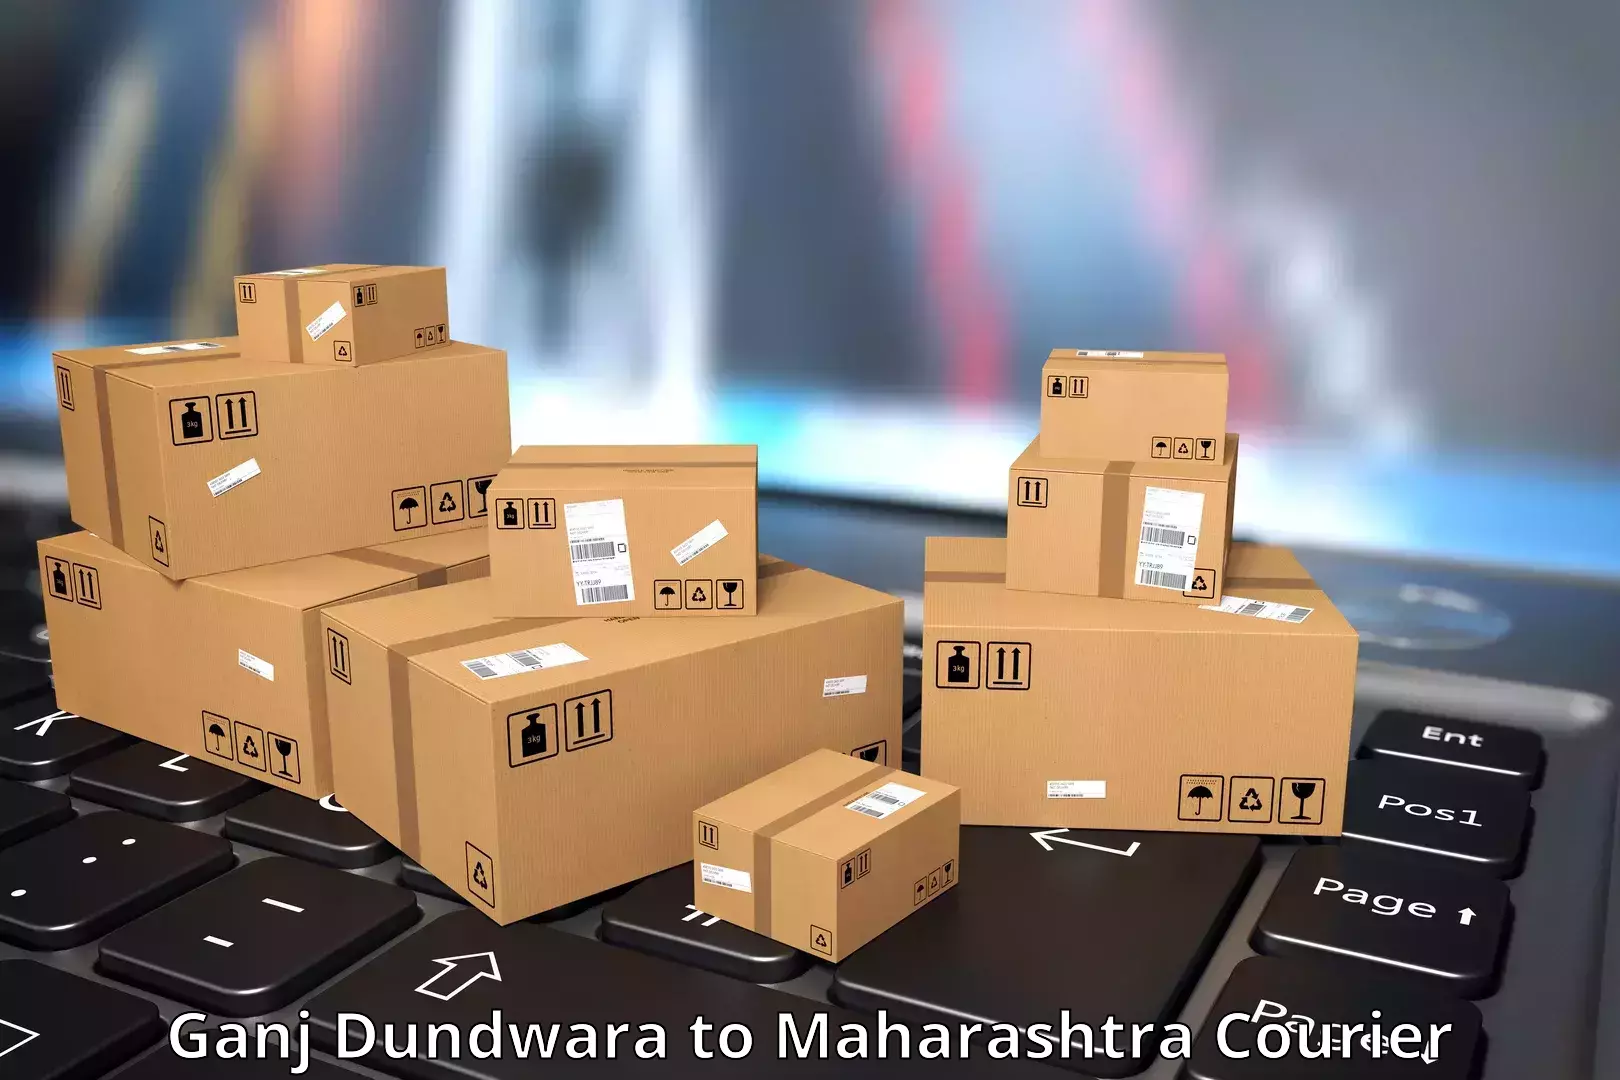 State-of-the-art courier technology Ganj Dundwara to Baramati